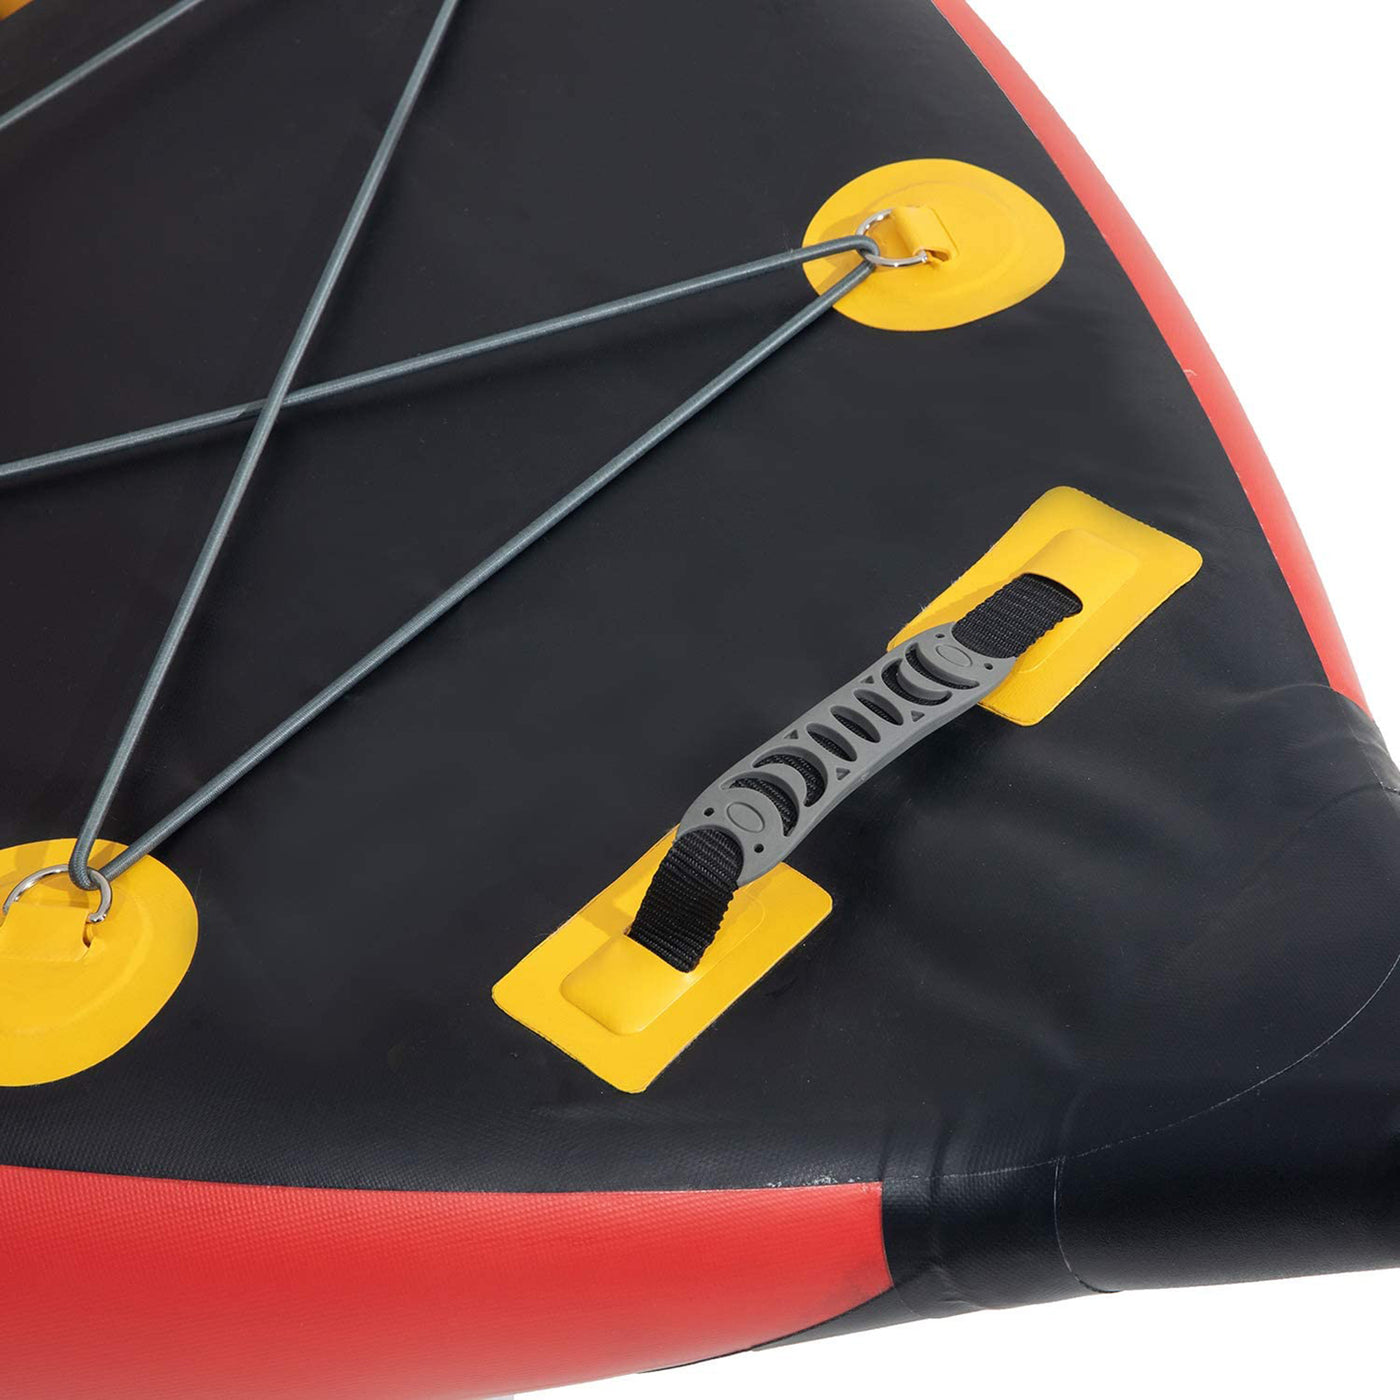 Freein 12'6 Explorer Kayak Gonflable